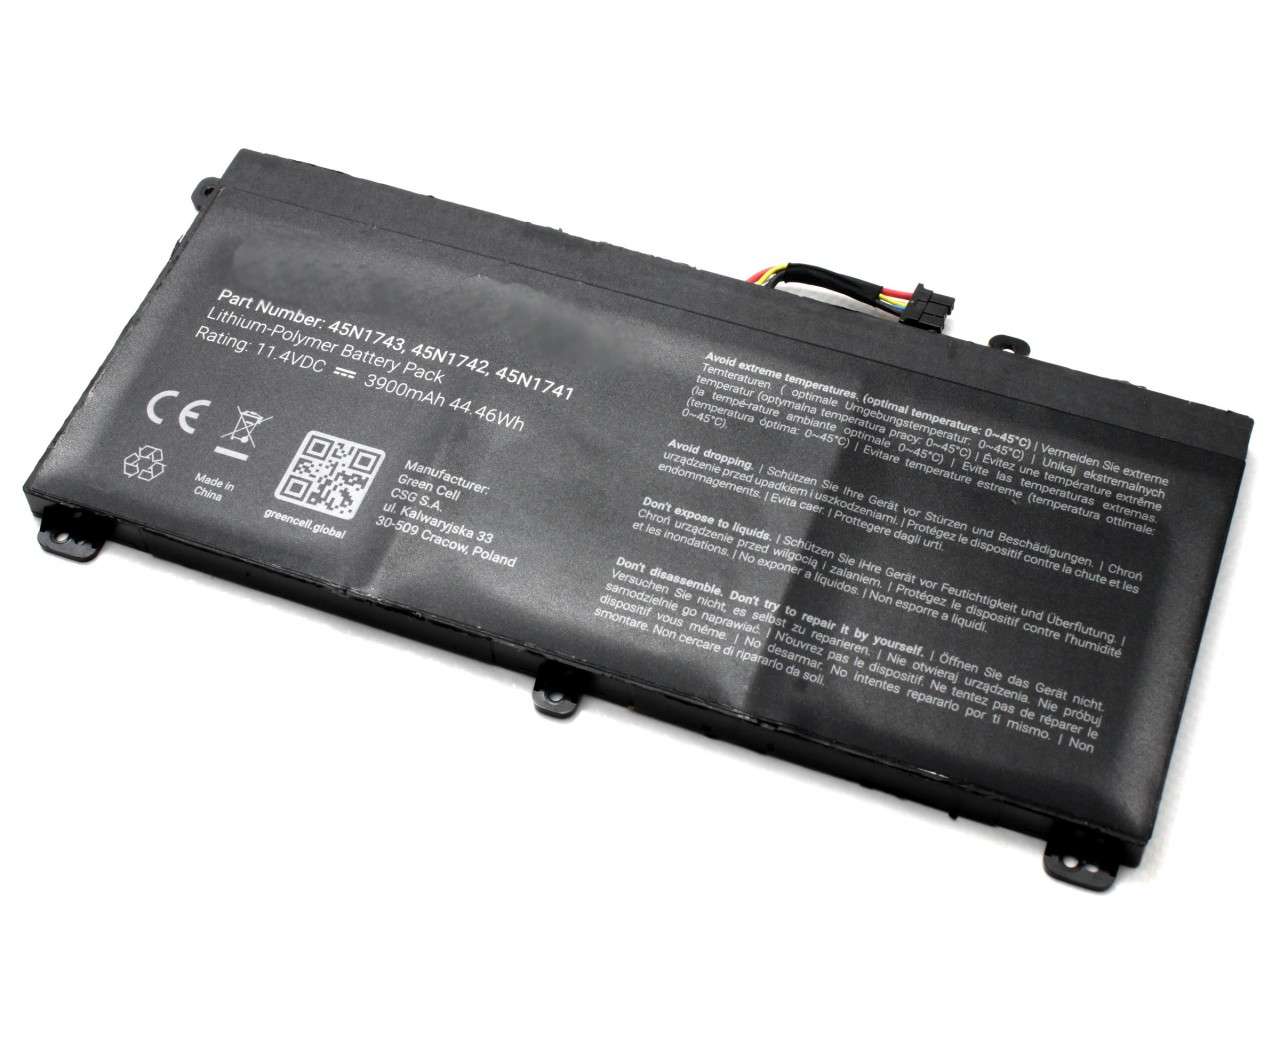 Baterie Lenovo 45N1741 3900mAh